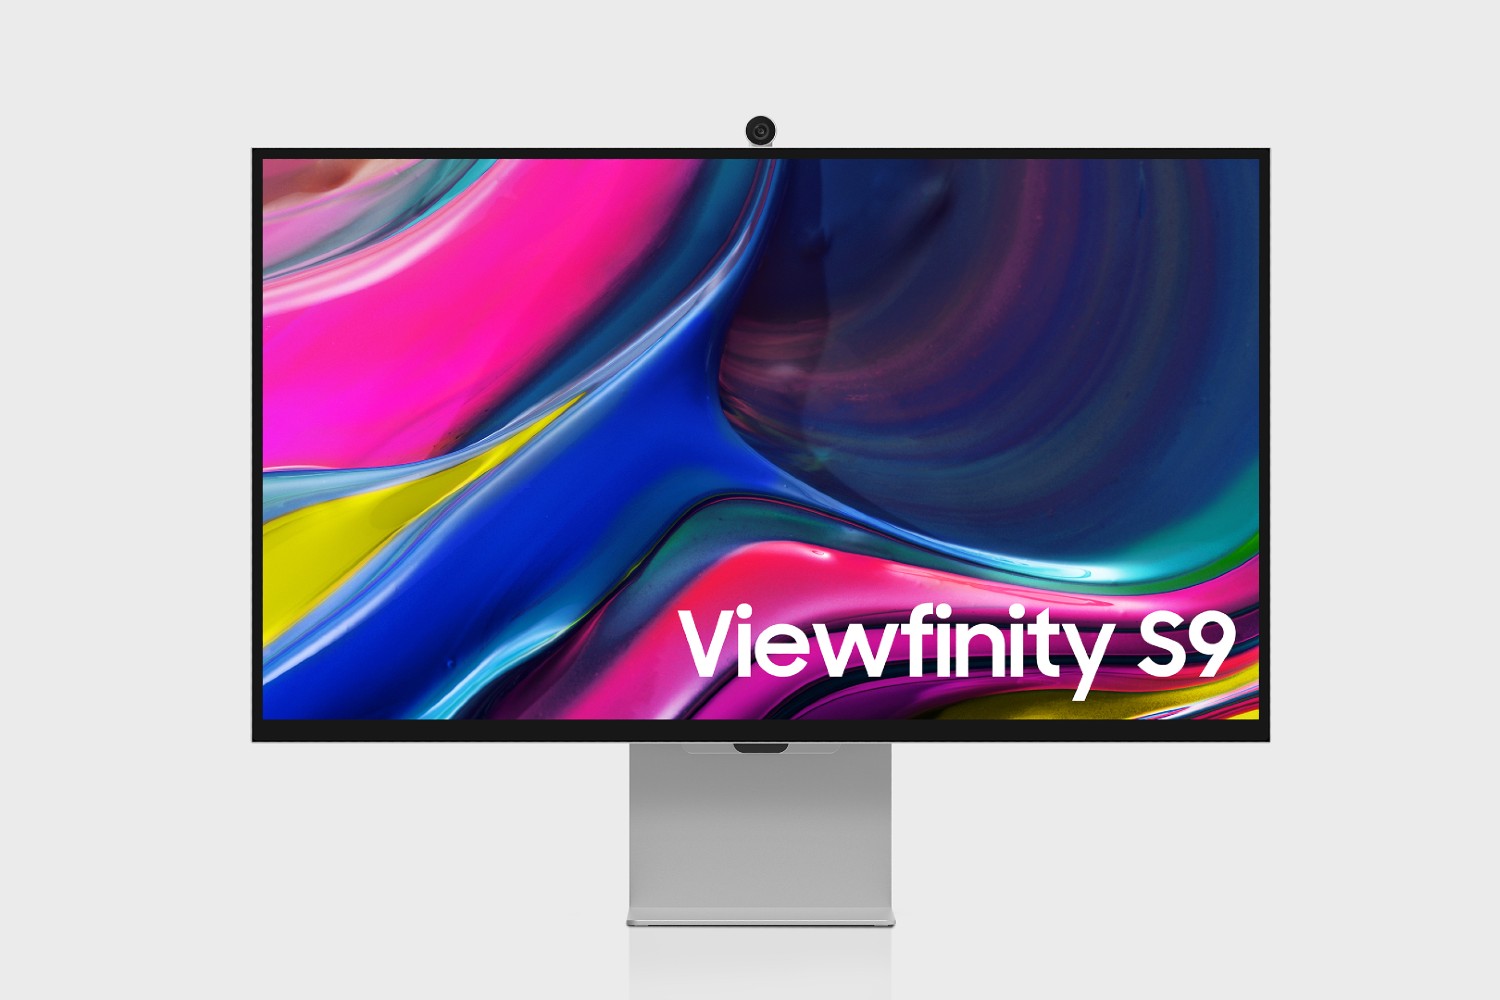 Монитор Samsung Viewfinity S9 с веб-камерой сверху.